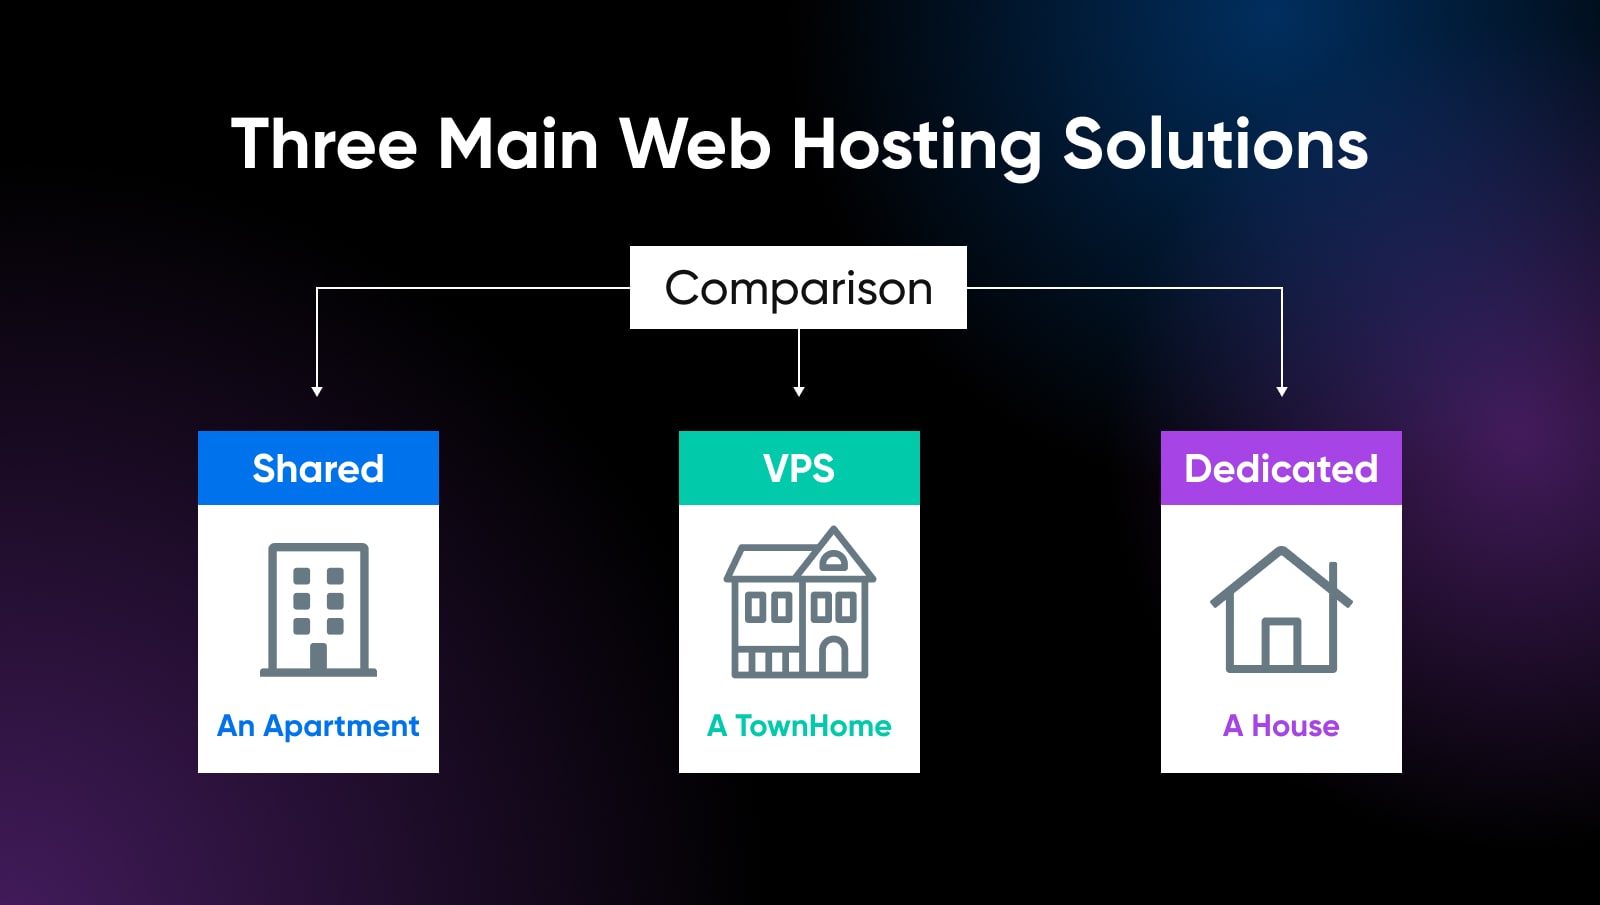 three main hosting solutions: shared (like an apartment), VPS (like a townhome) and dedicated (like a house) 